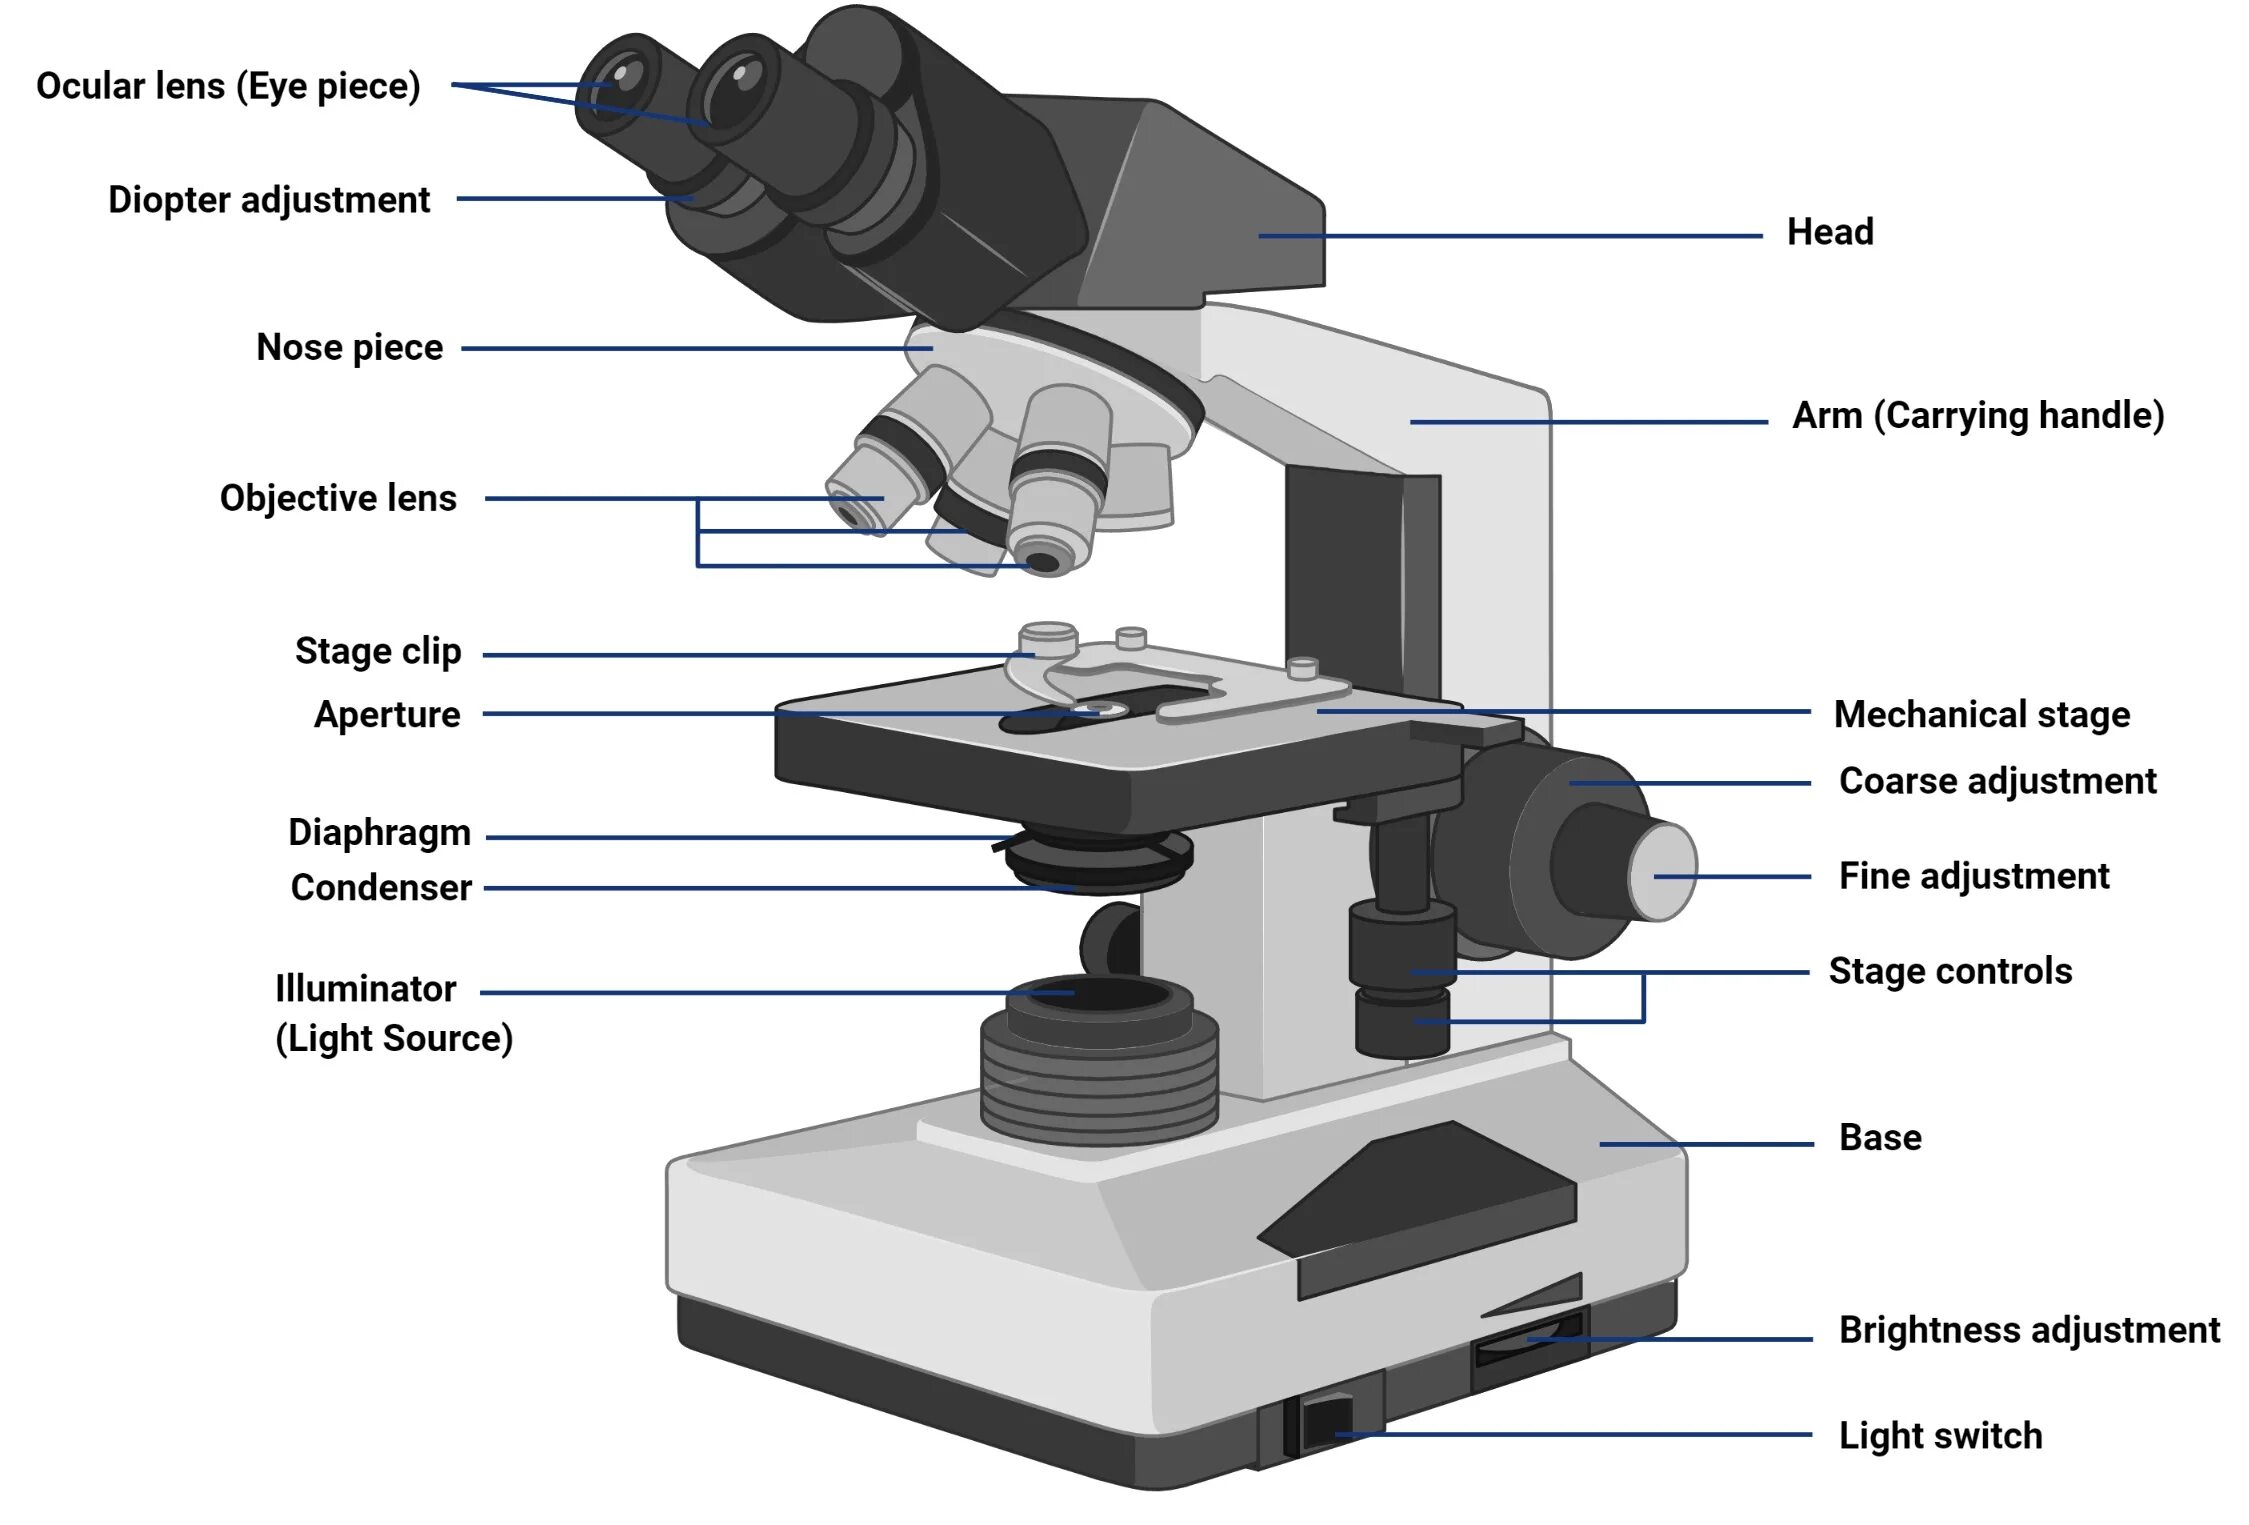 Детали цифрового микроскопа 5 класс биология. Микроскоп p5000i Digital Analysis Microscope. Микроскоп с2108. Строение микроскопа макровинт. Строение микроскопа Микмед.